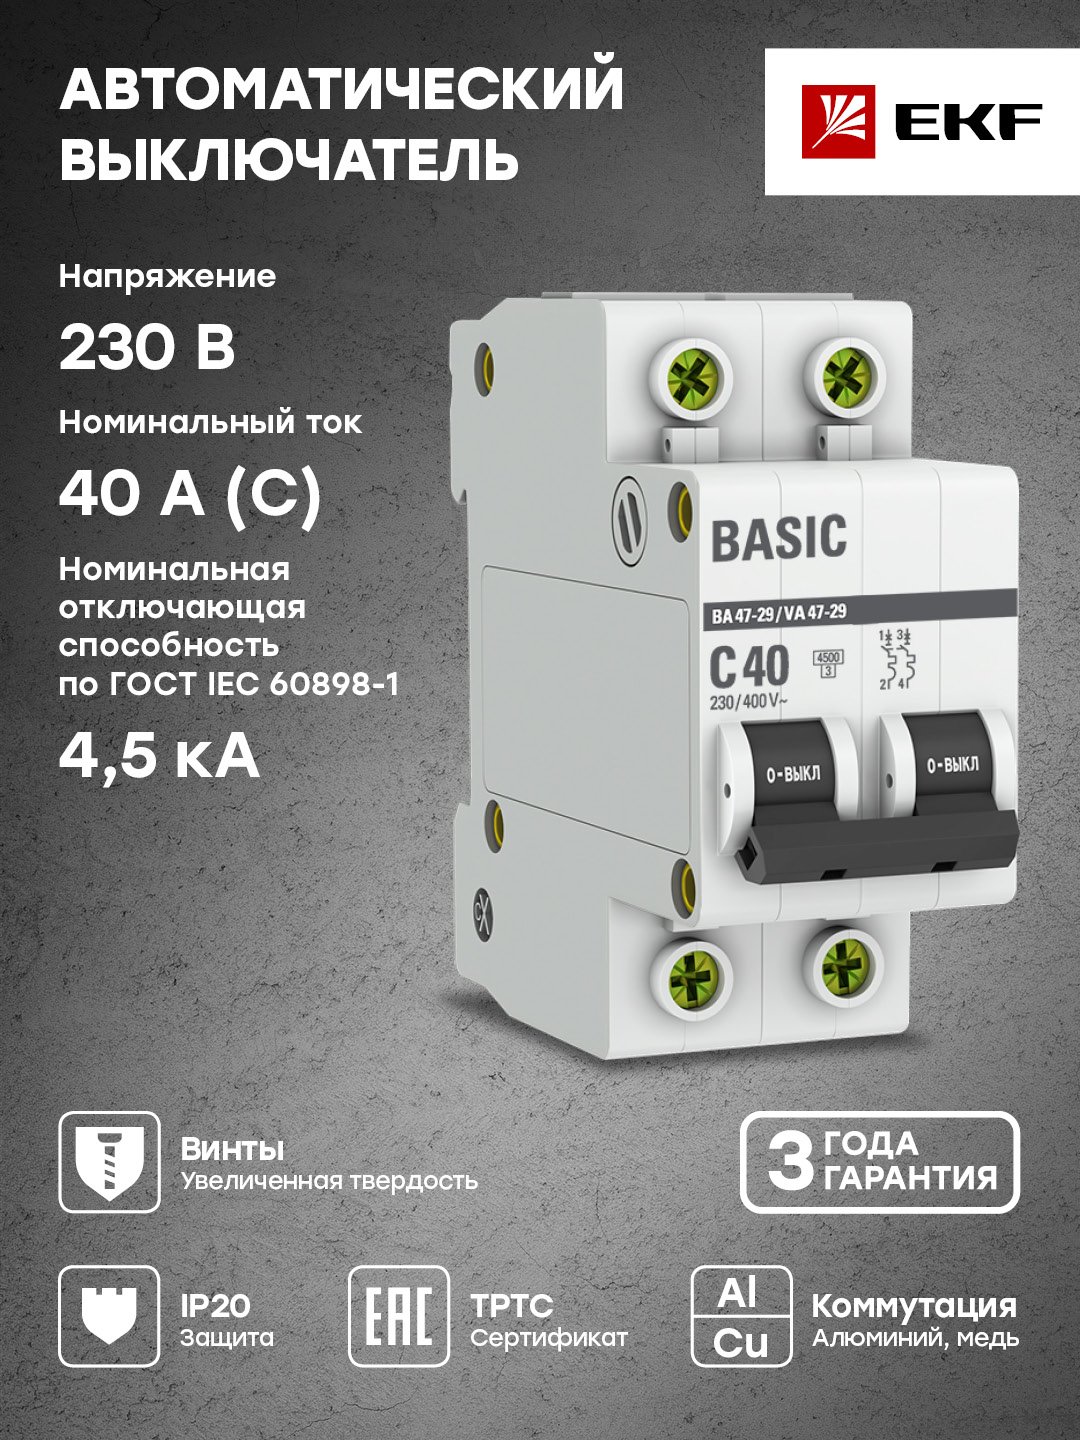 Автоматический выключатель EKF Basic 2P 40А (C) 4,5кА ВА 47-29 mcb4729-2-40C